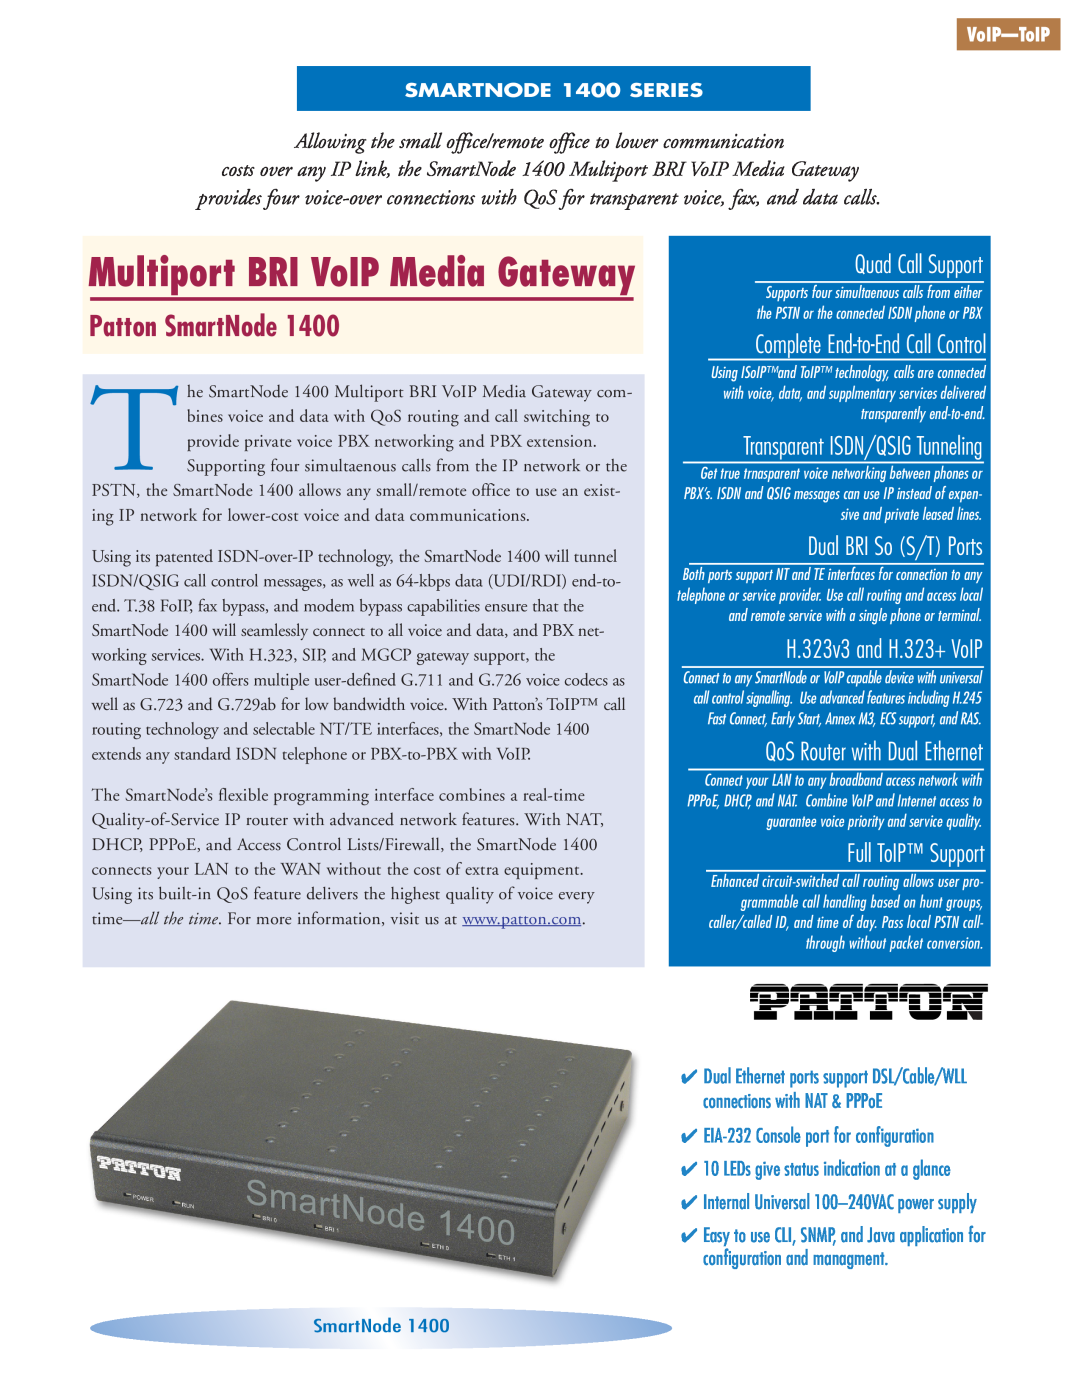 Patton electronic 1400 Series manual Multiport BRI VoIP Media Gateway, Patton SmartNode, Quad Call Support 